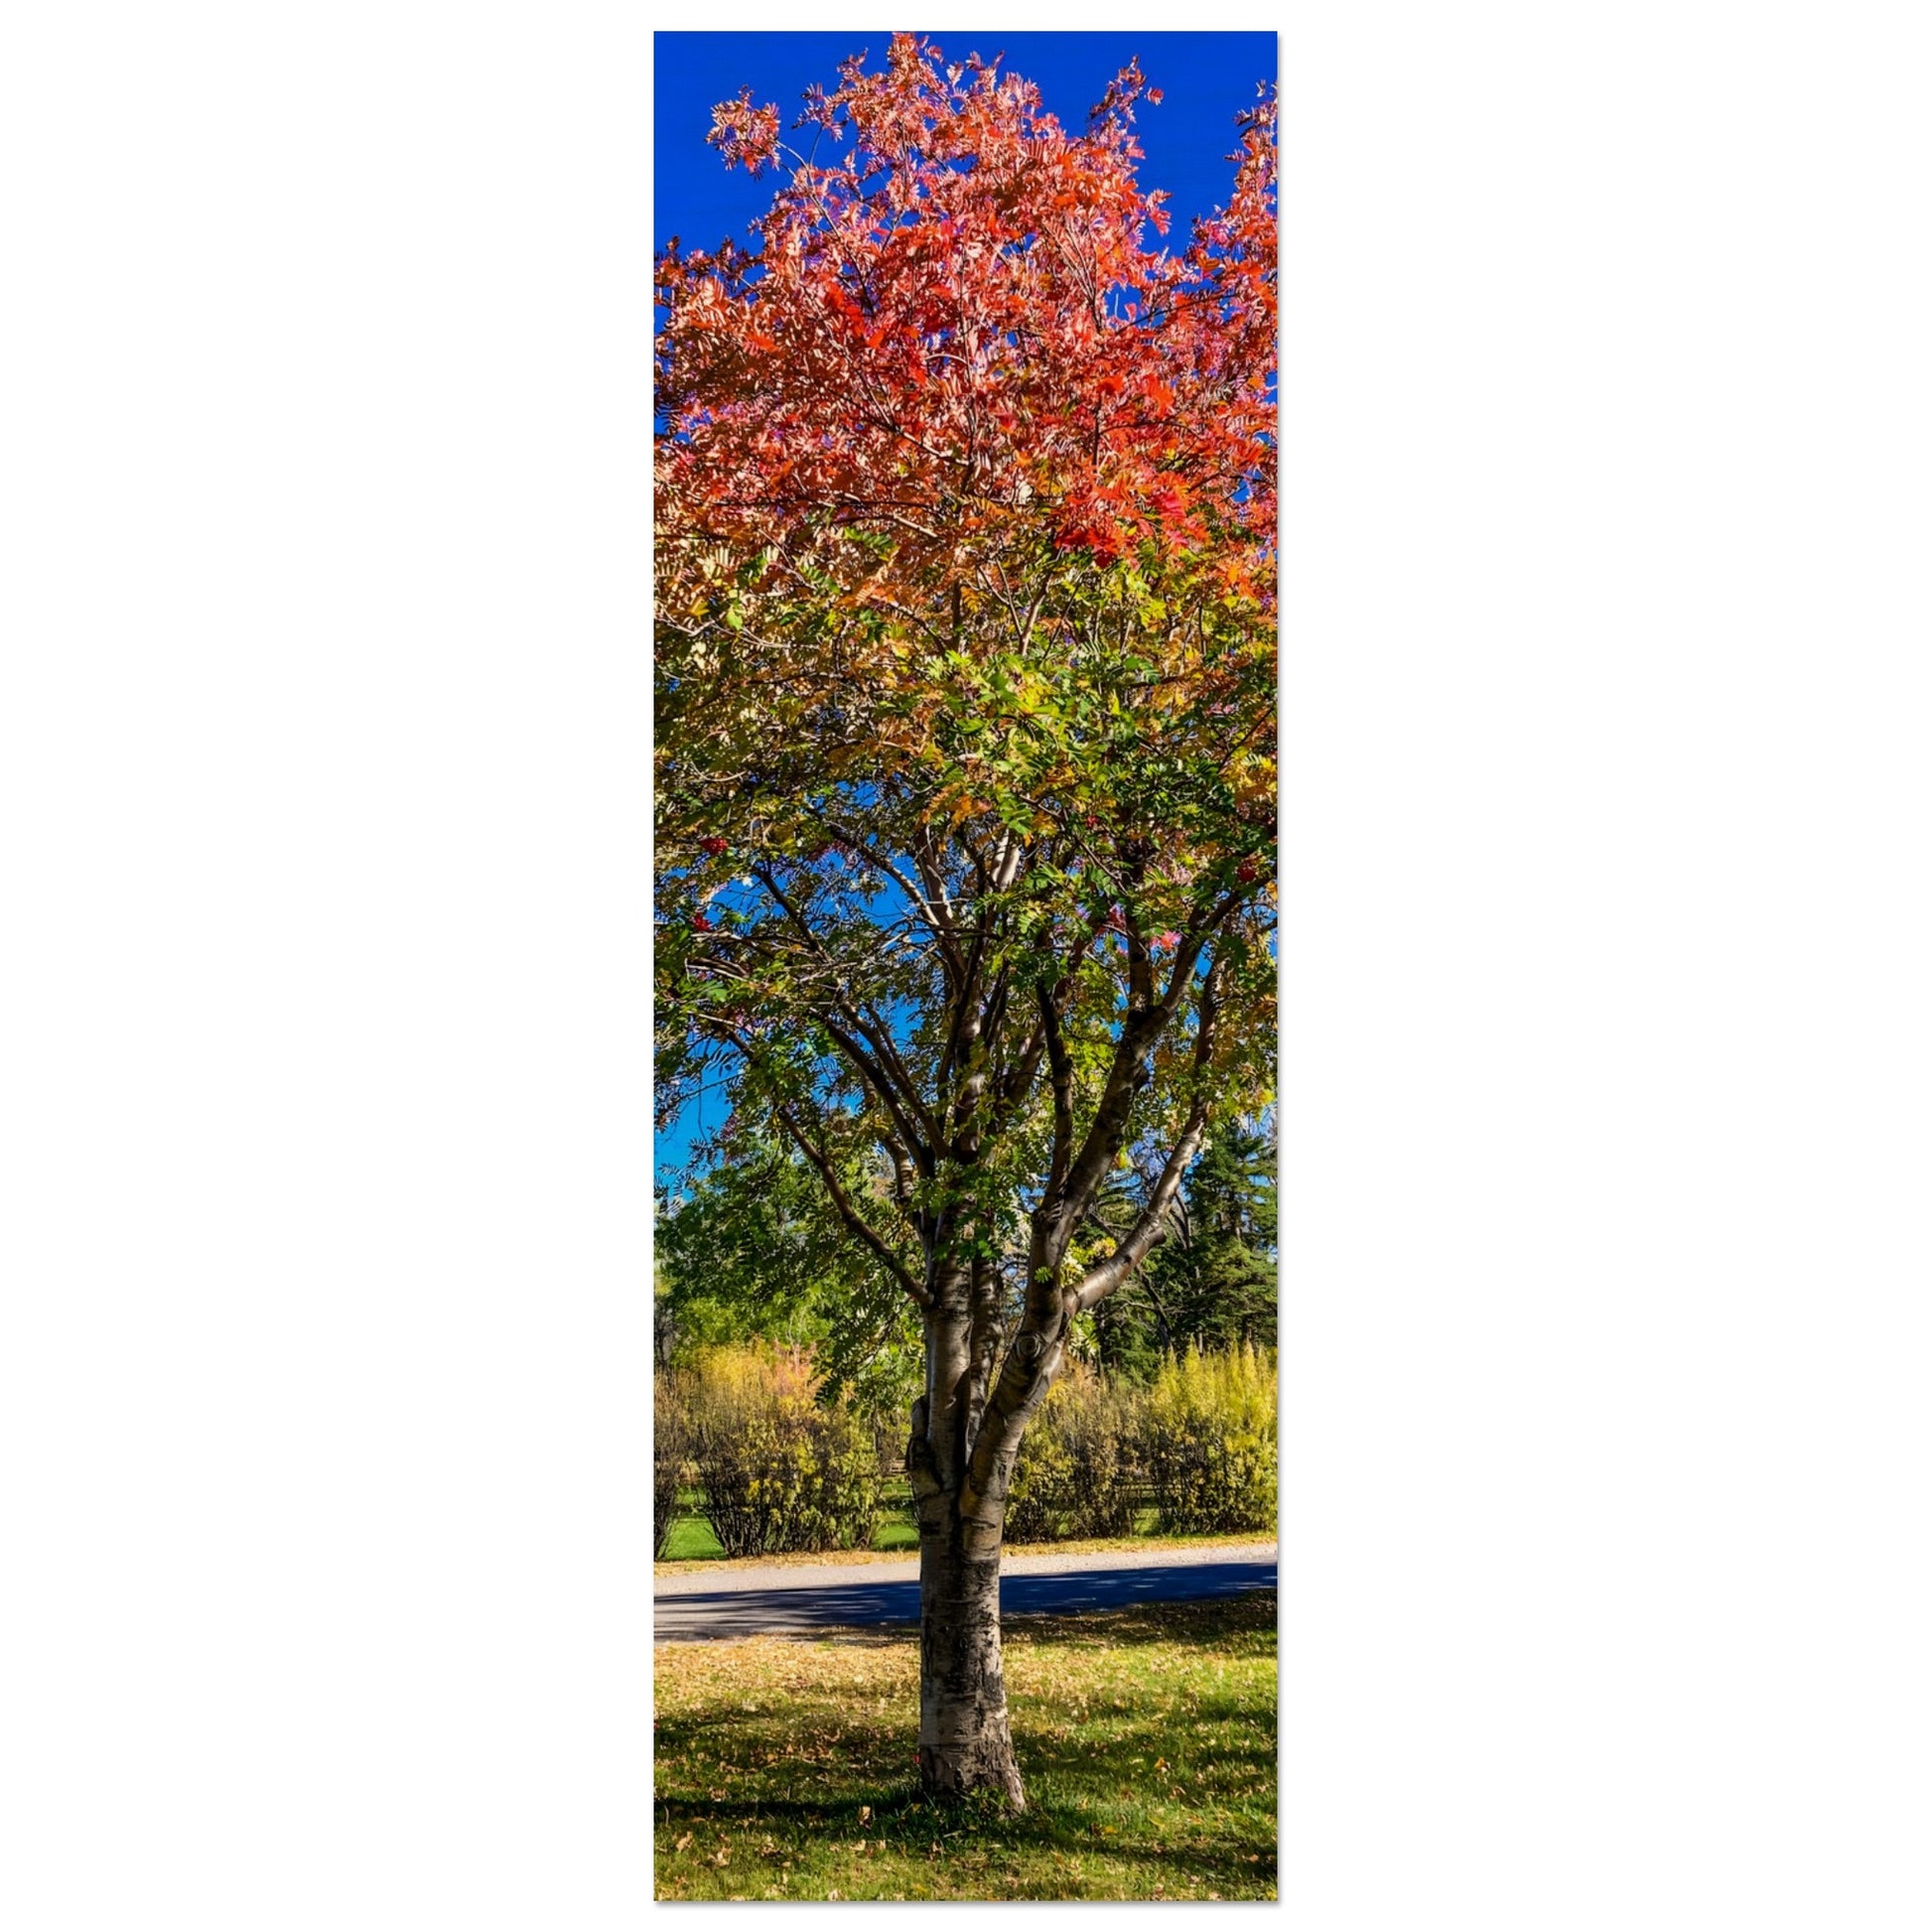 Prism Amelanchier: An Autumn Amelanchier Tree in Montana Wood Print. Original Photography by James Bonner.